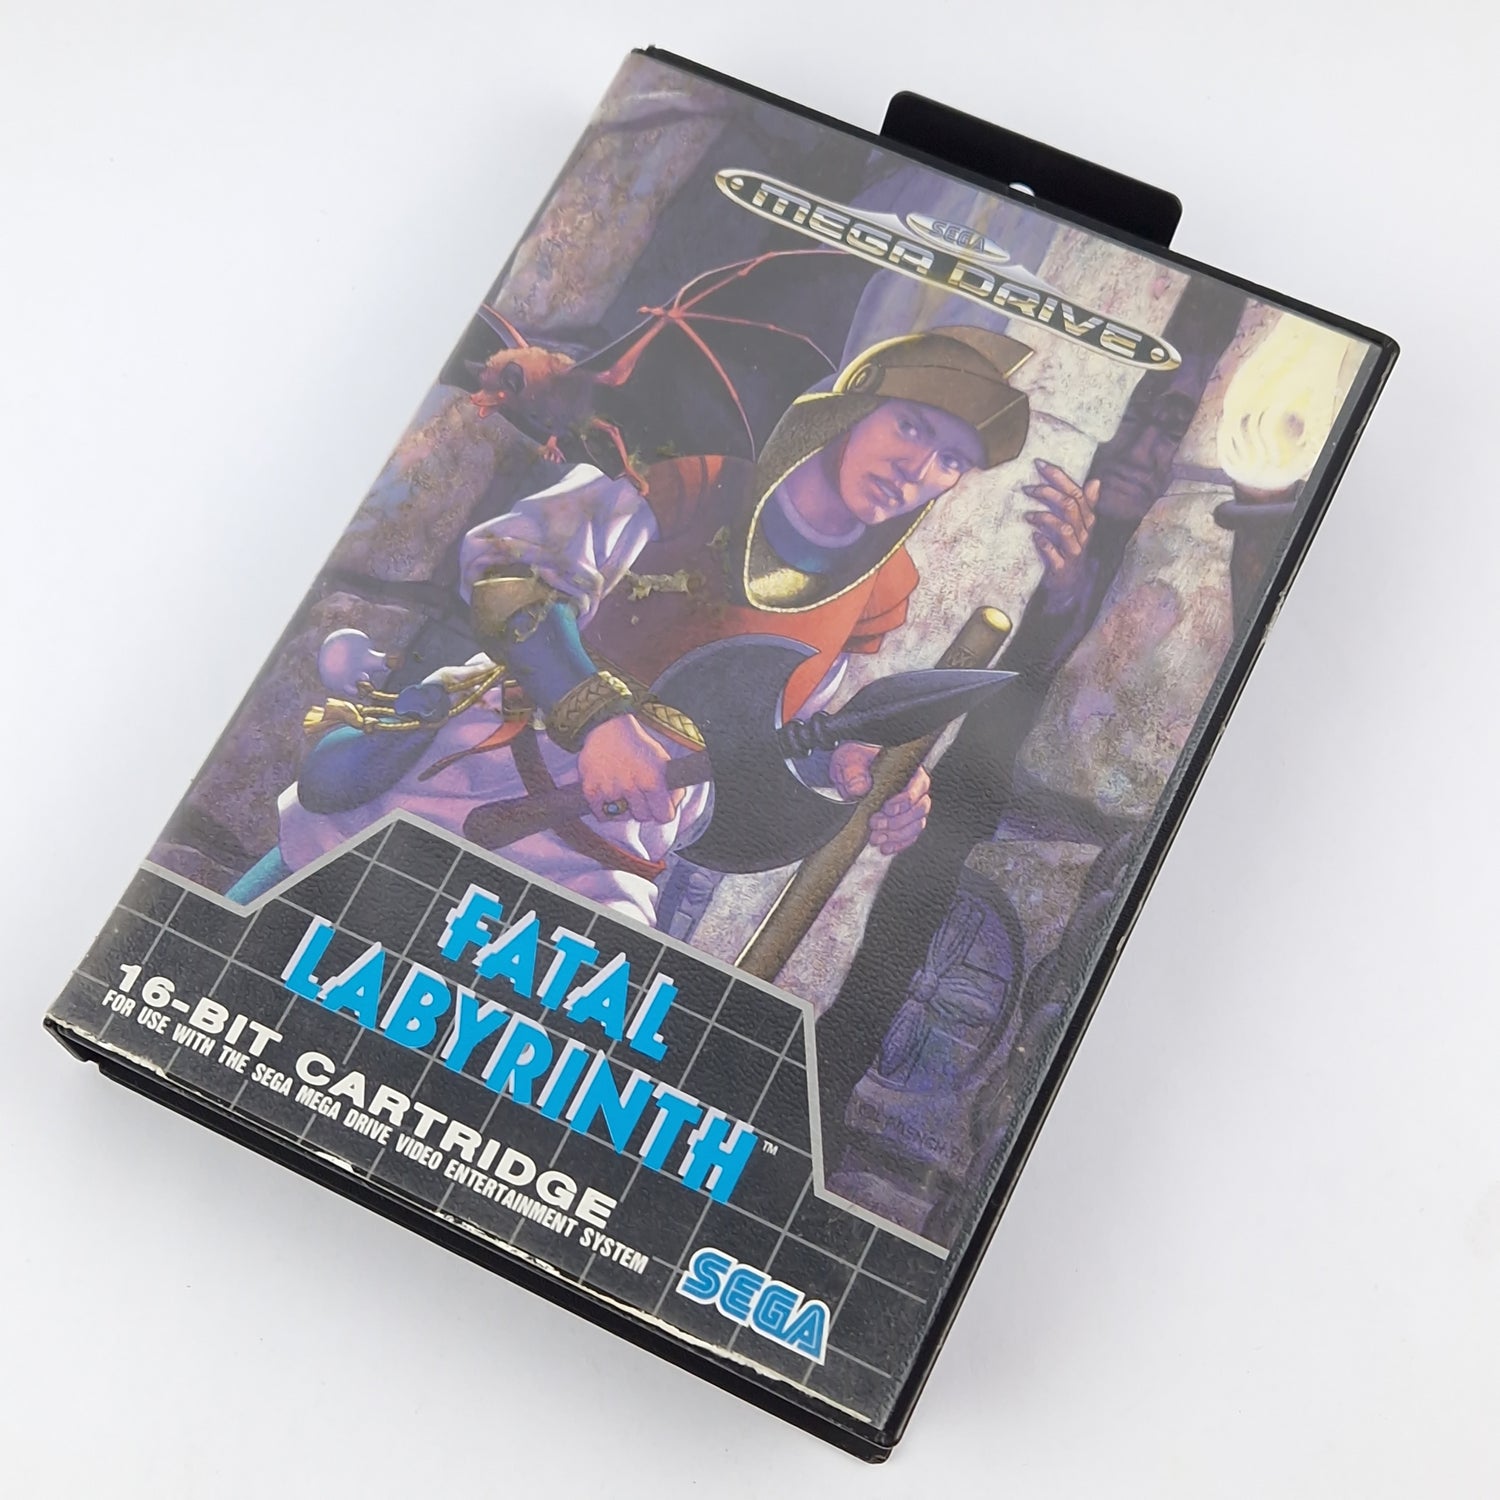 Sega Mega Drive Game: Fatal Labyrinth - Module Instructions OVP cib / PAL MD Game